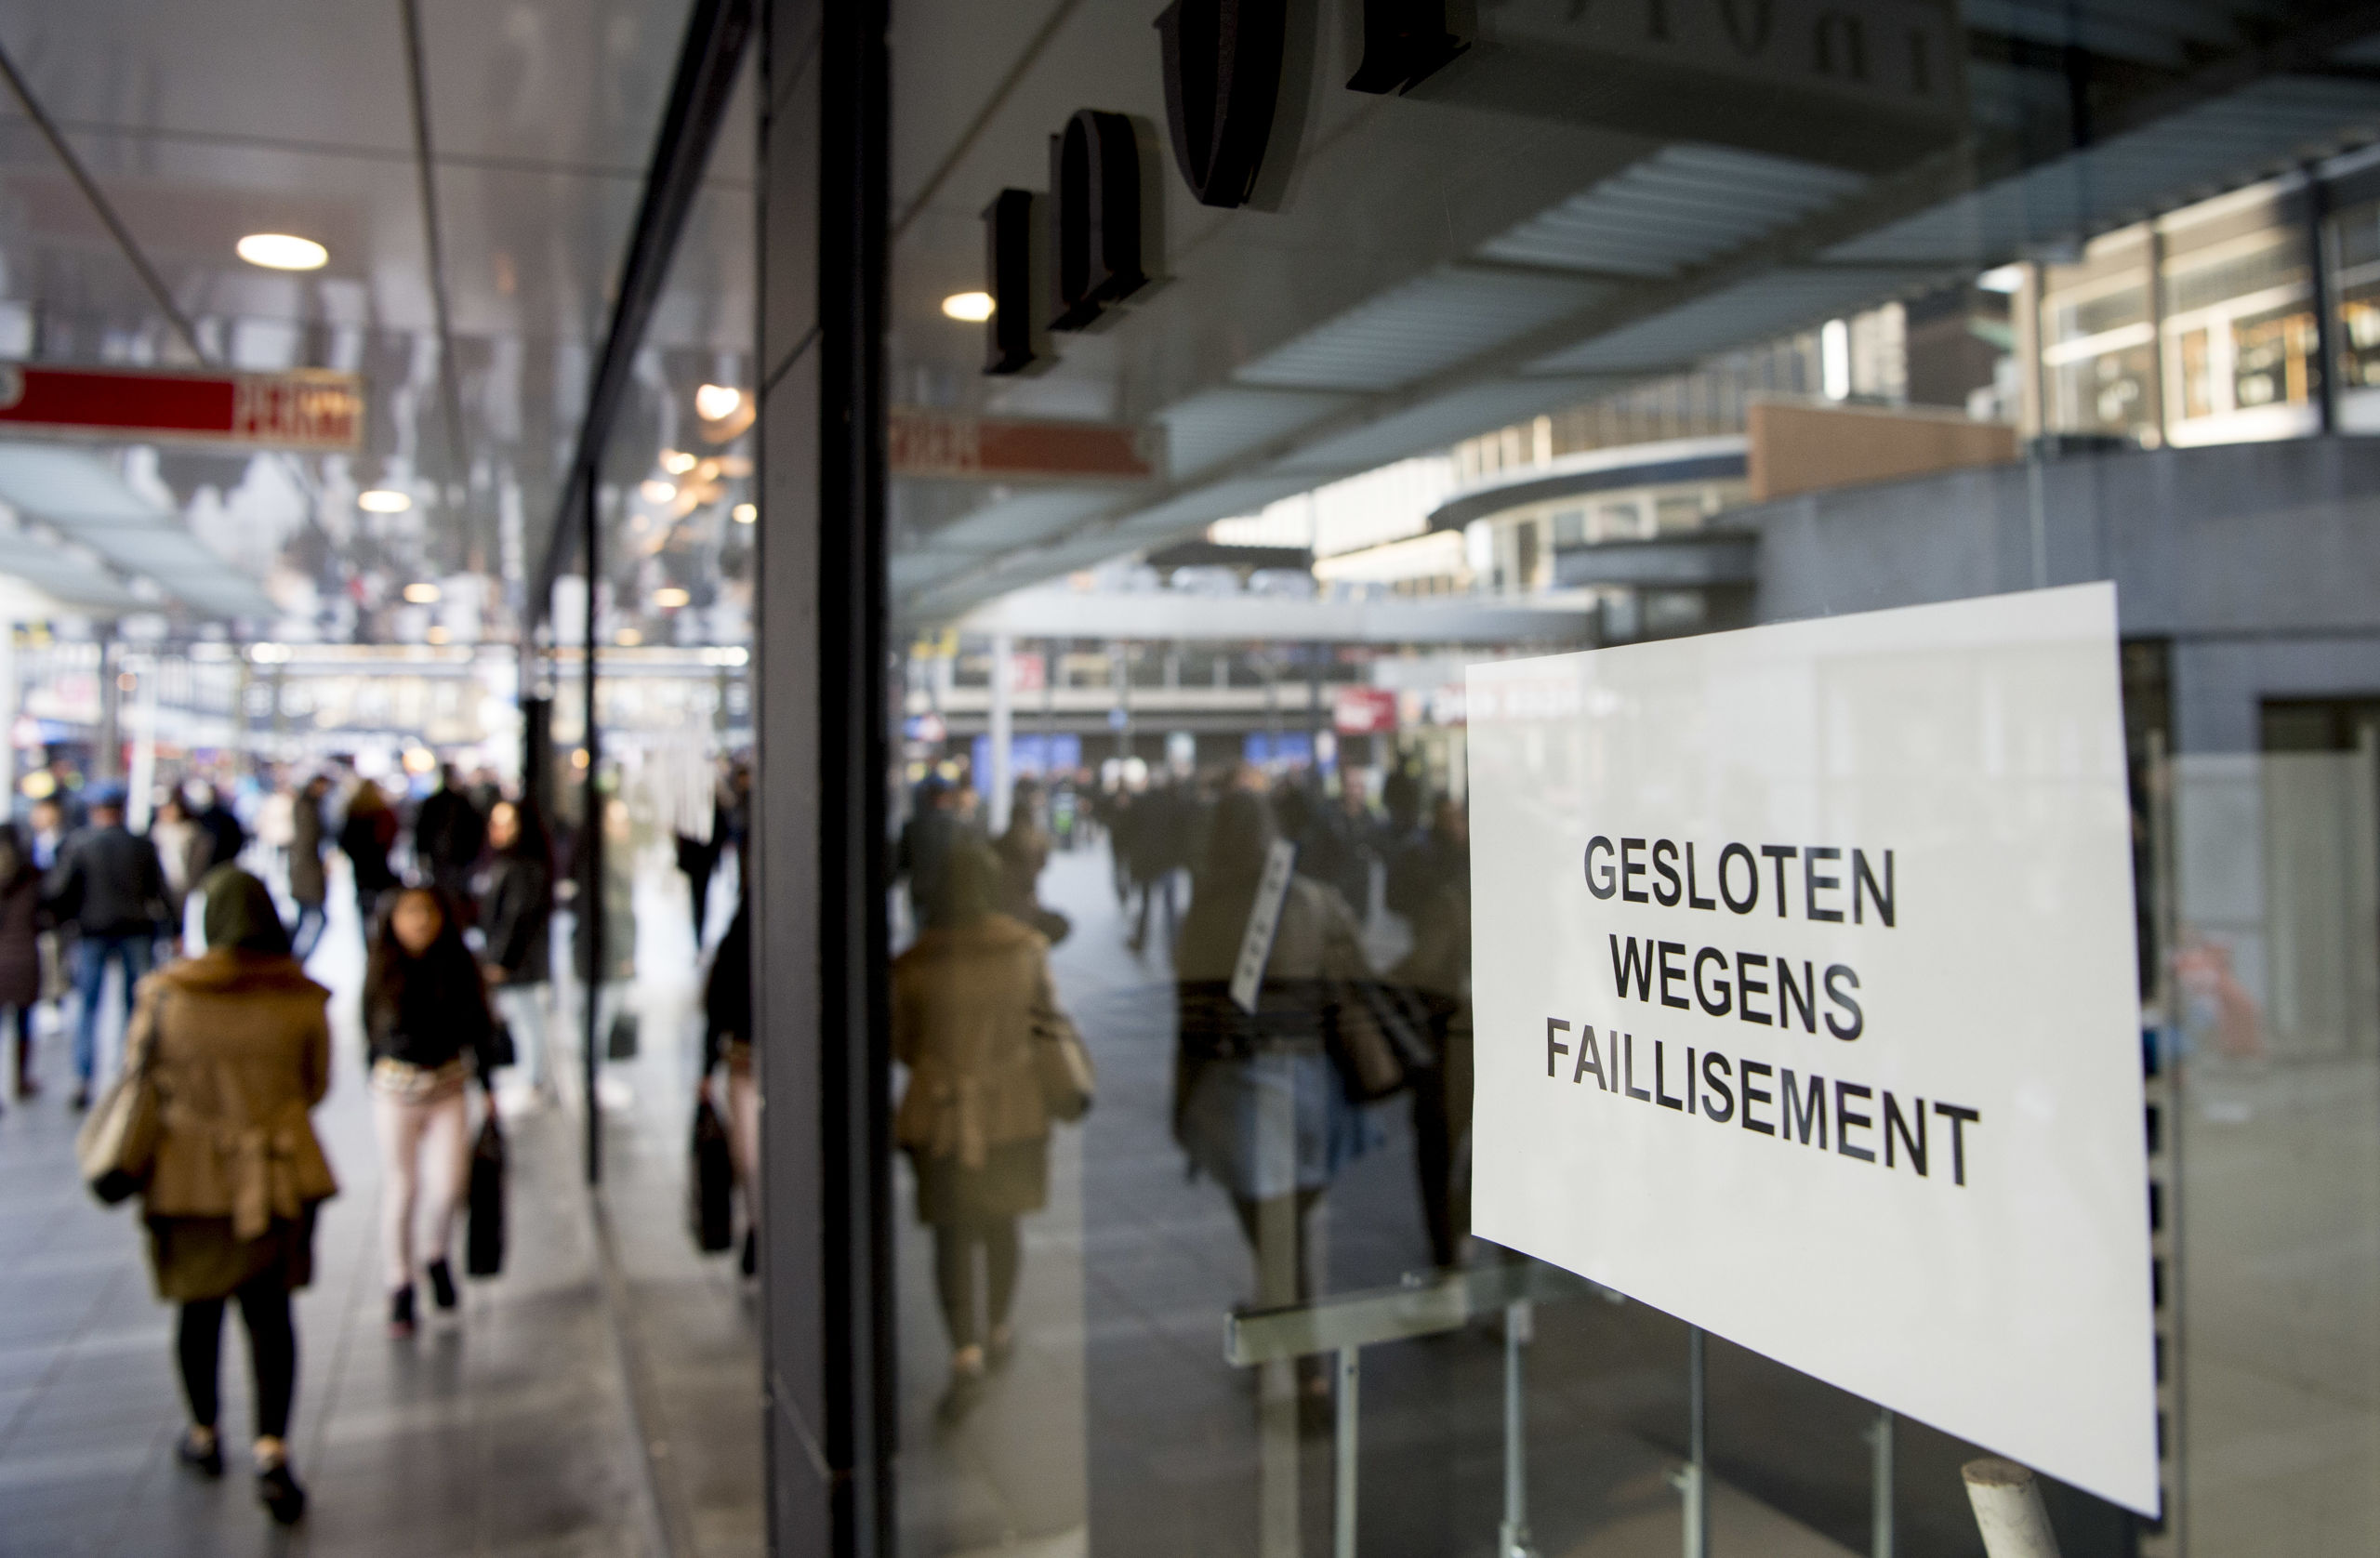 Leegstaande winkels en failliette winkels in het centrum Rotterdam